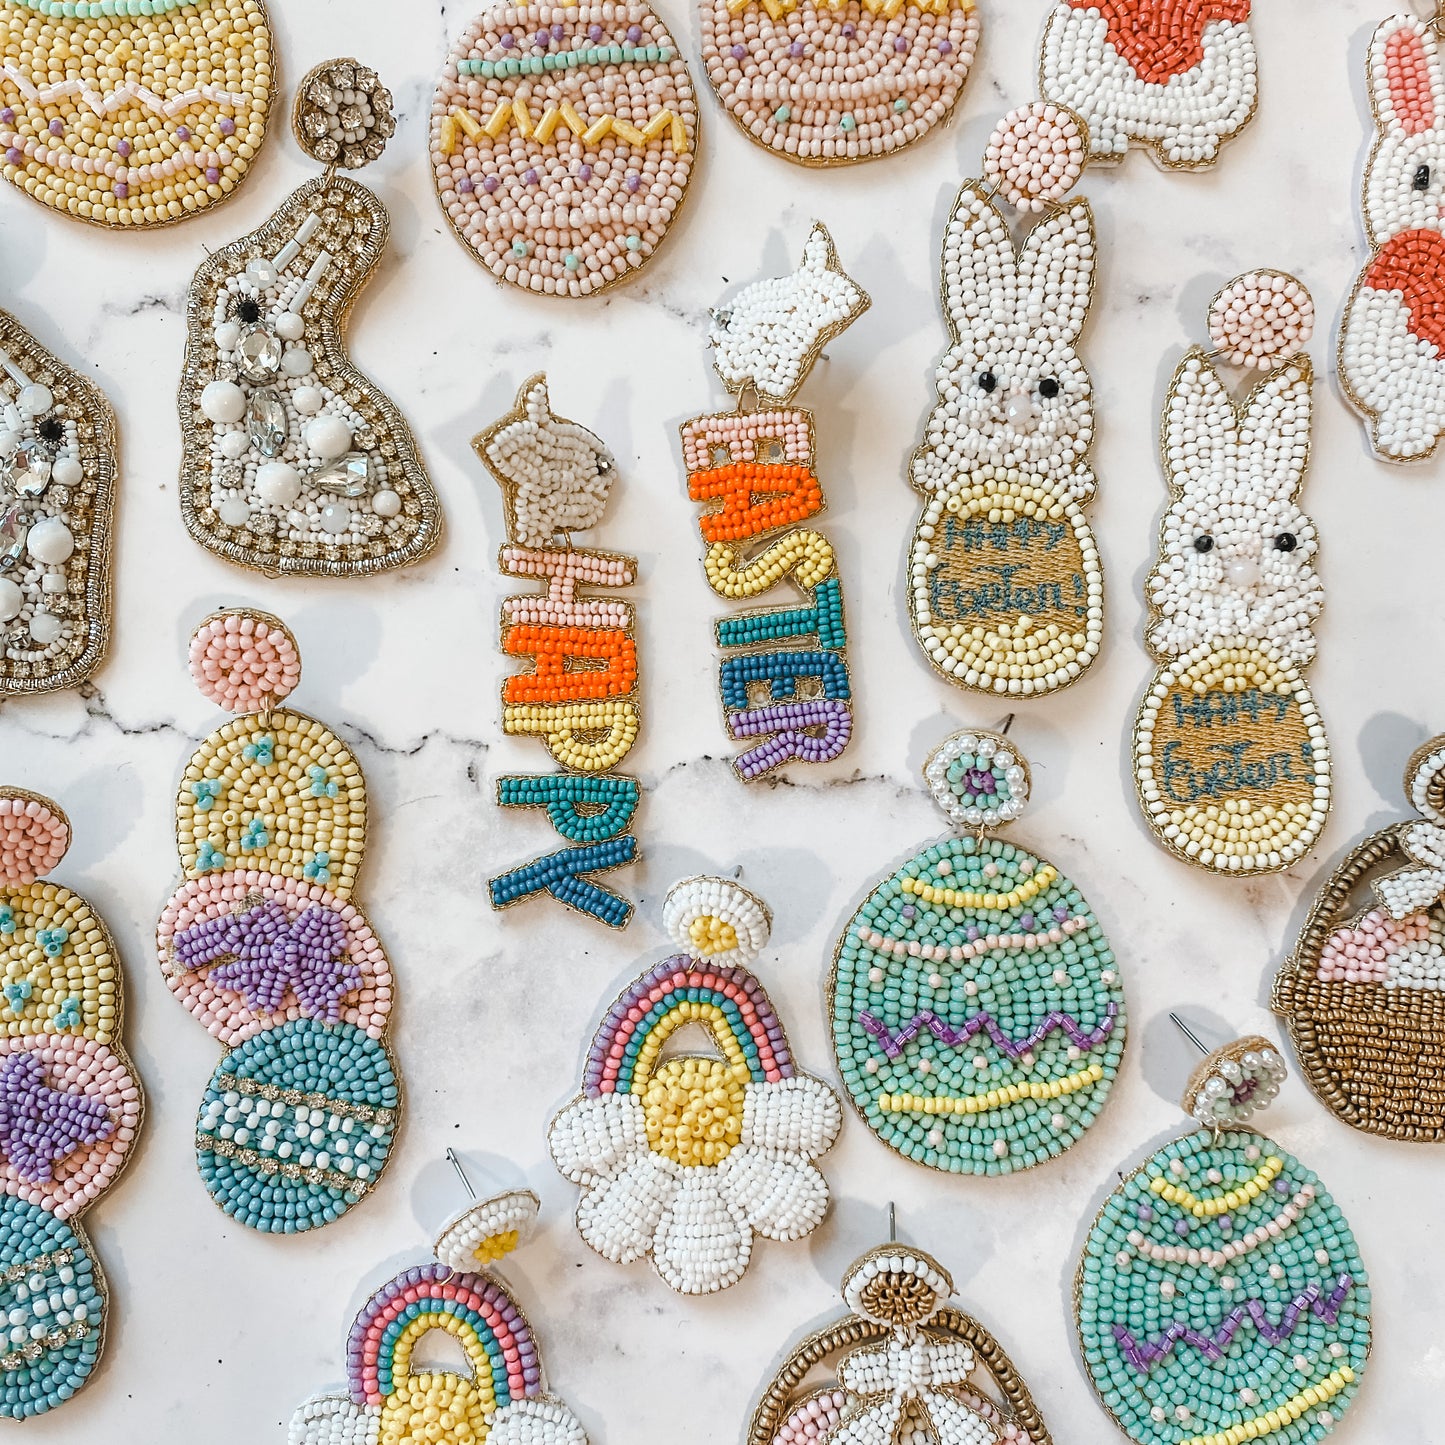 Happy Easter Colorful Beaded Earrings